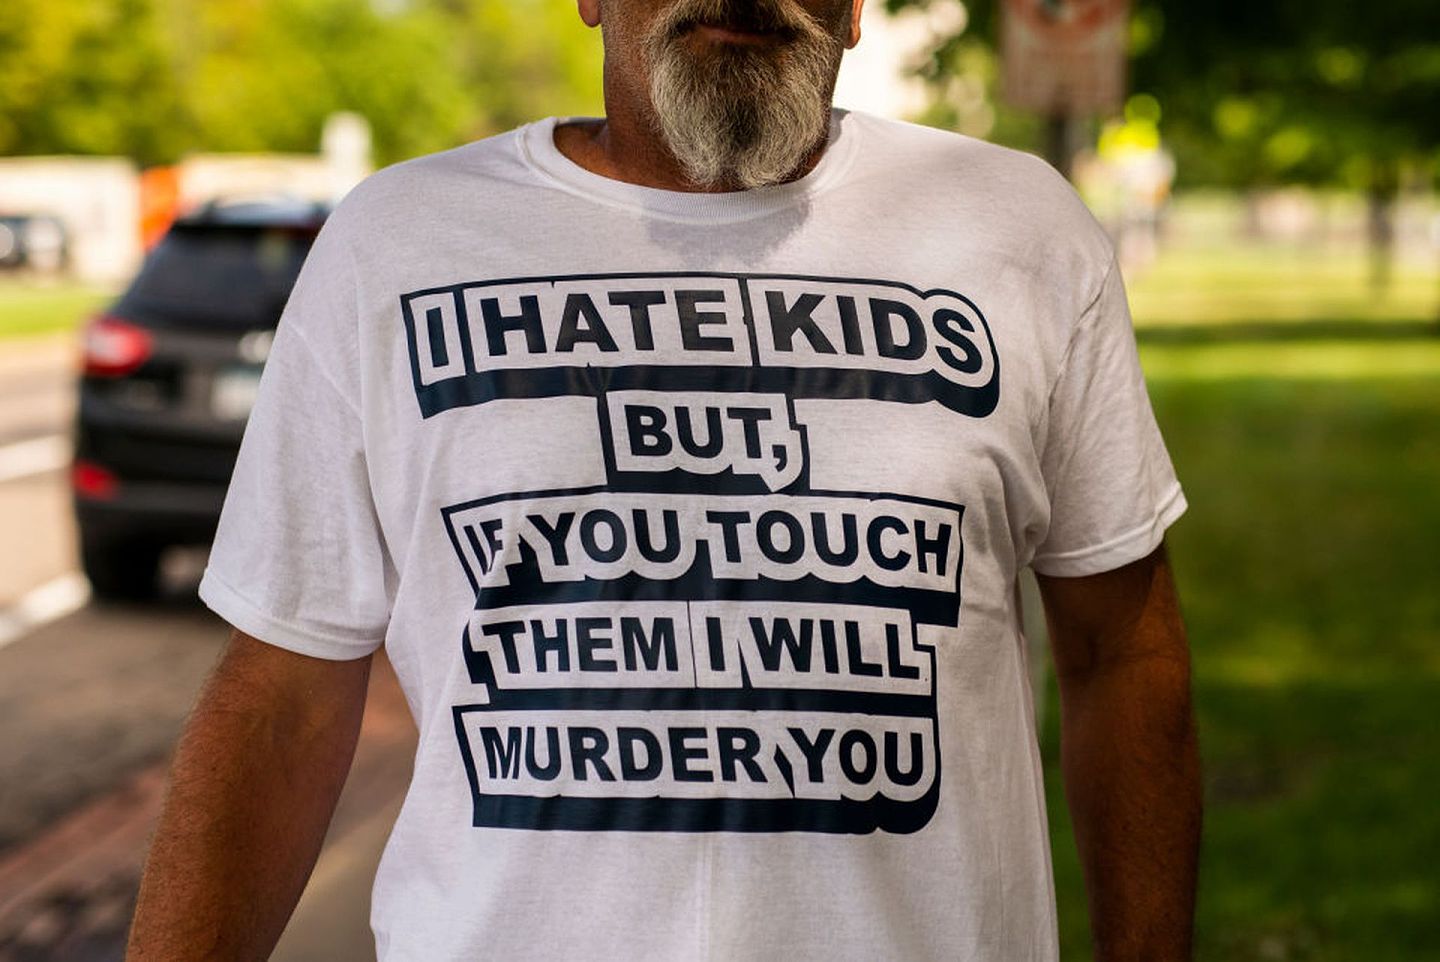 QAnon信徒穿着印有“我讨厌小孩，但如果你碰他们，我会把你杀死”的T恤。（GettyImages）